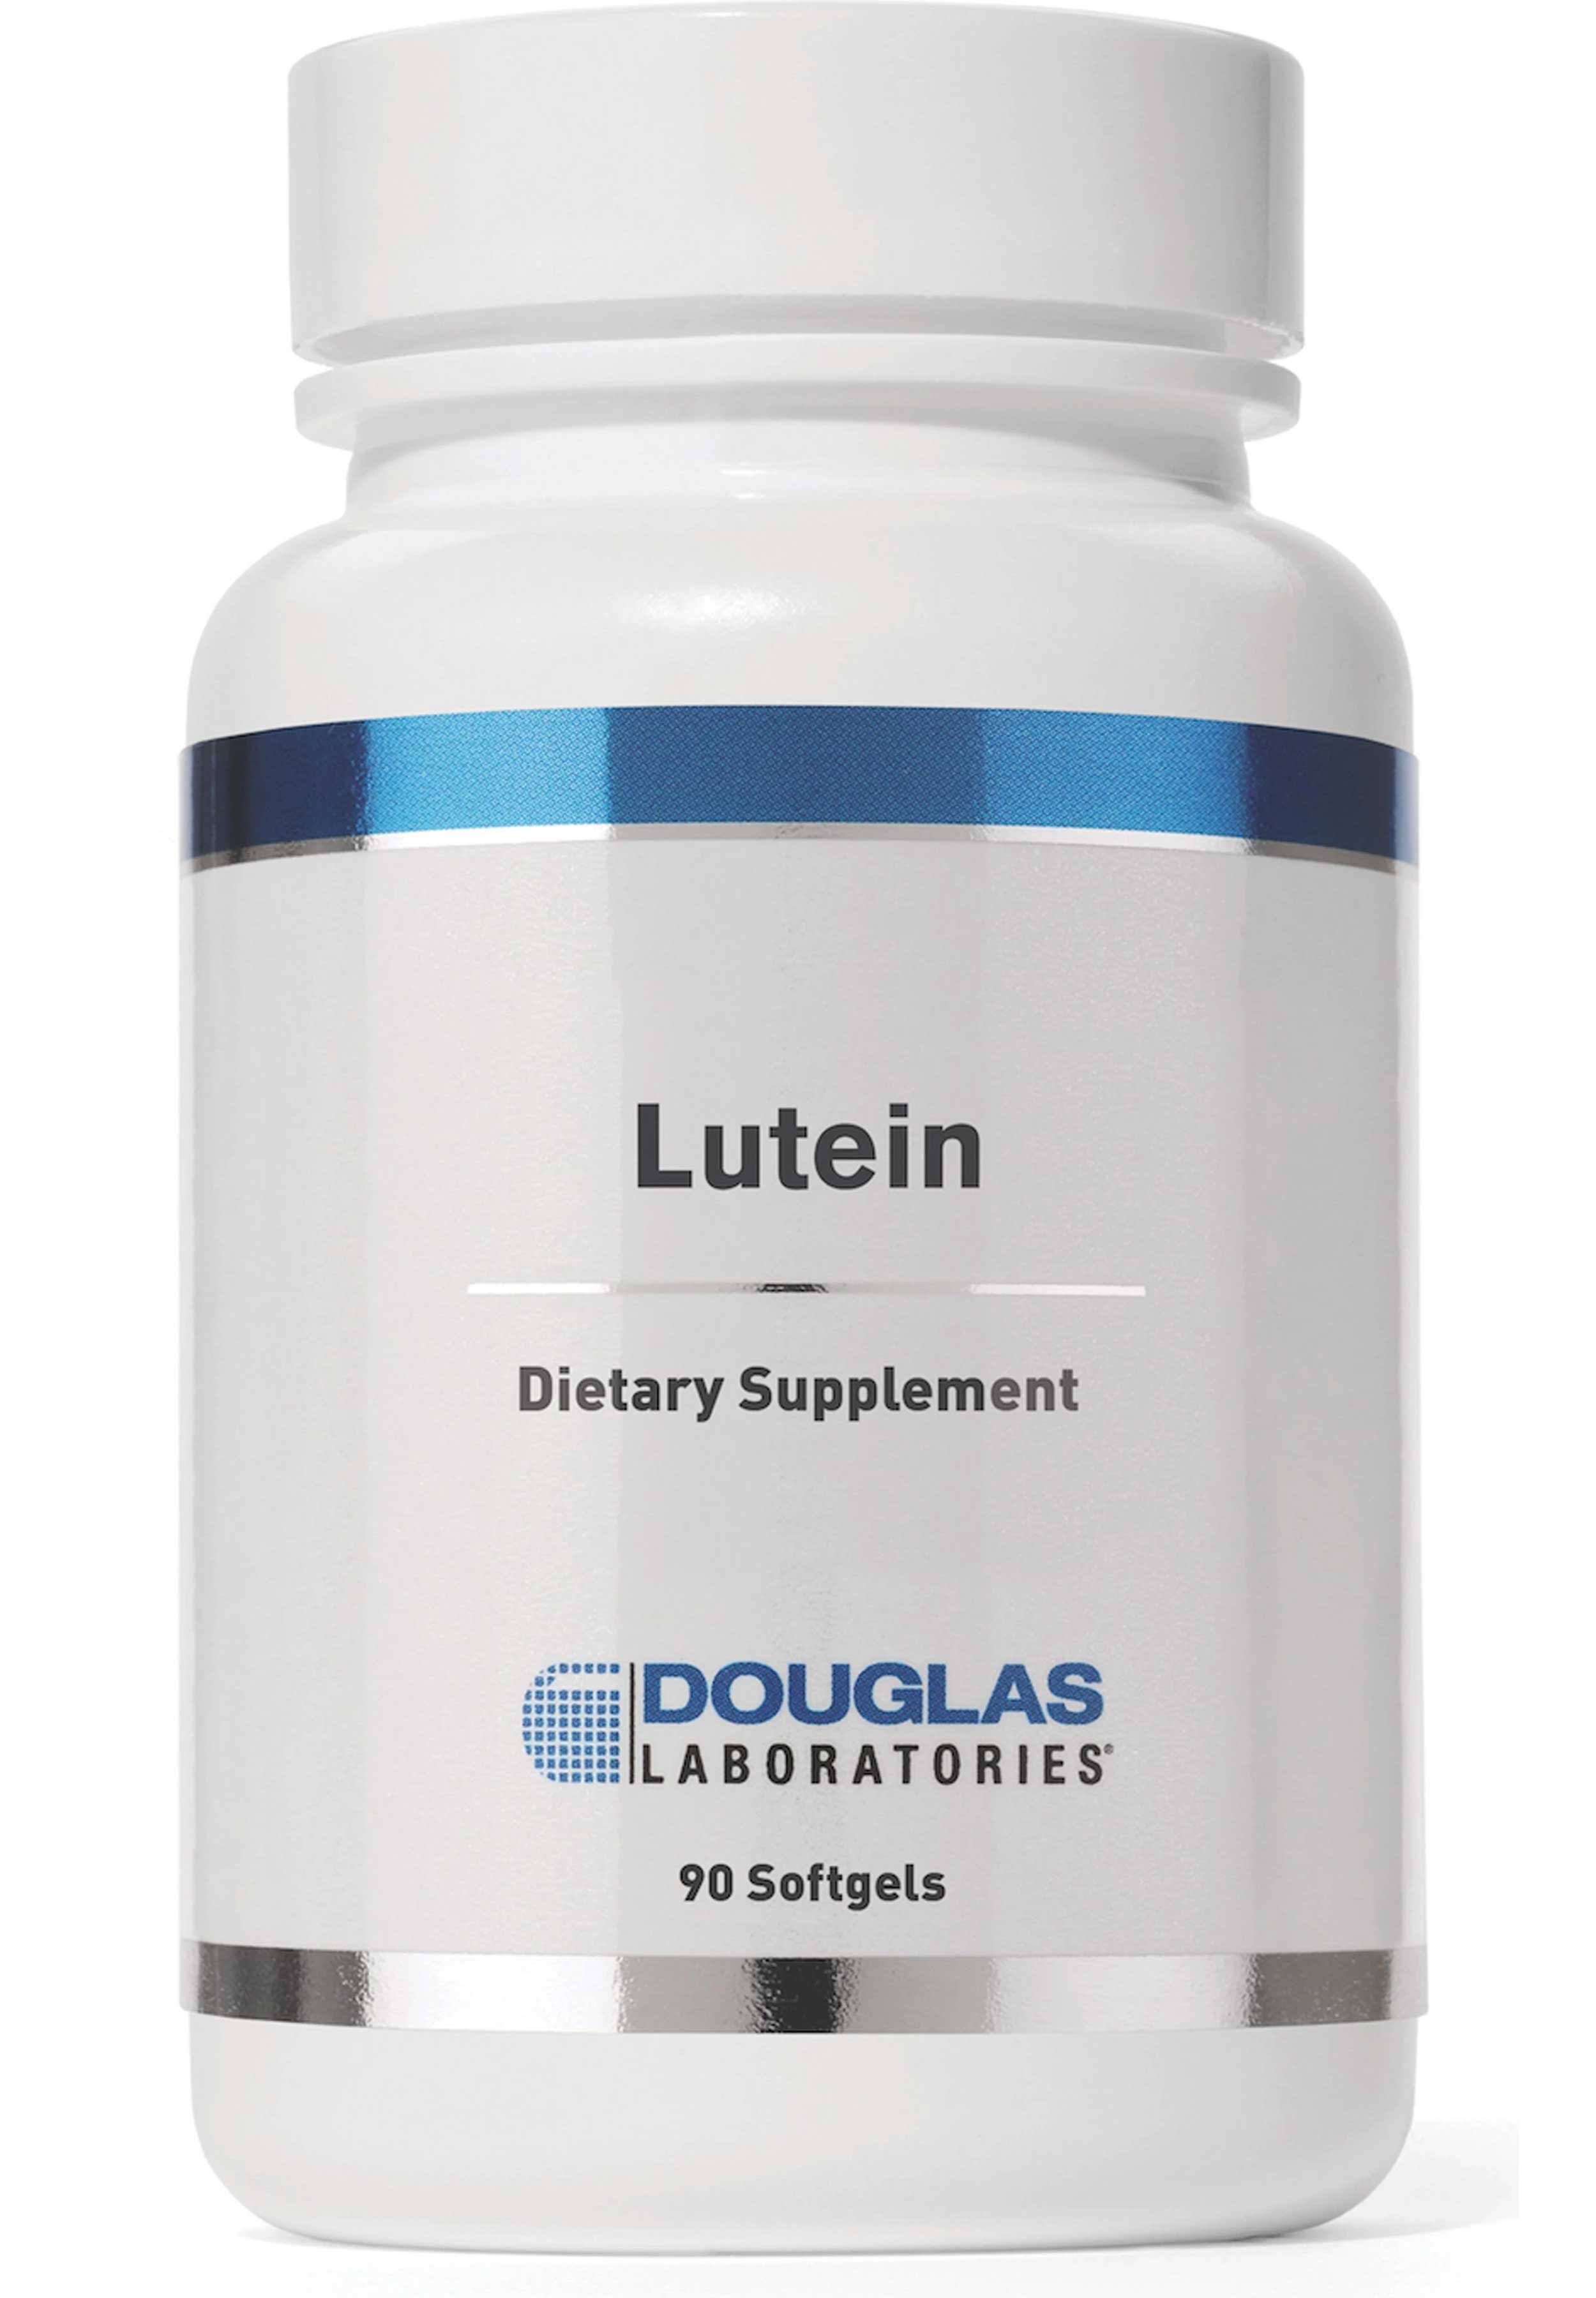 Douglas Laboratories - Lutein - 90 Softgels